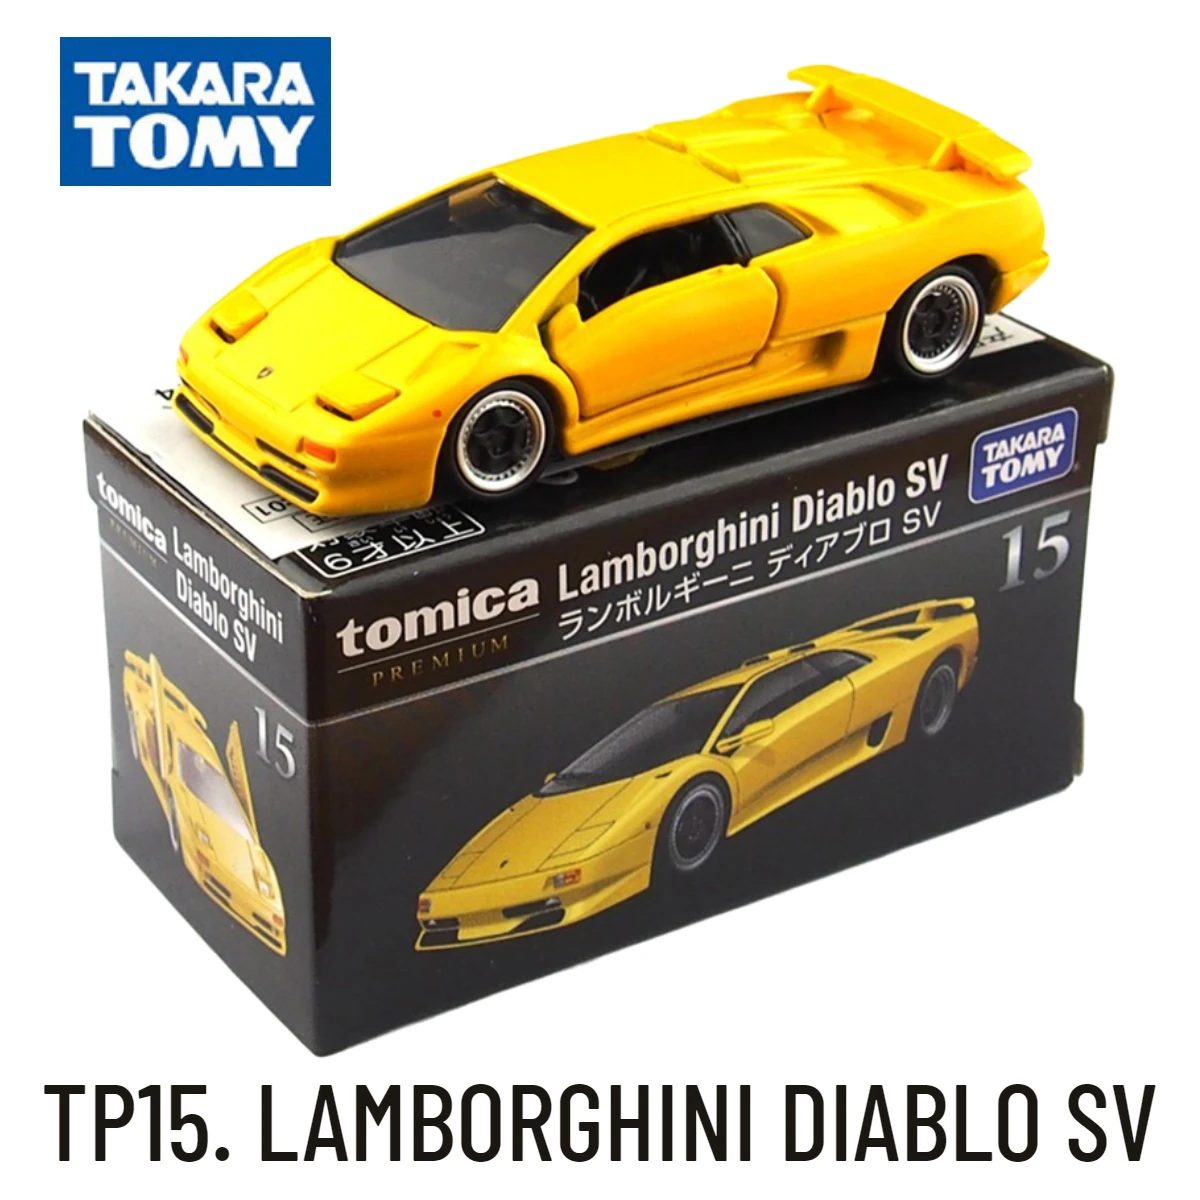 Takara Tomy Tomica Premium TP15. LAMBORGHINI DIABLO SV Scale Car Model Replica Collection, Kids Xmas Gift Toys for Boys